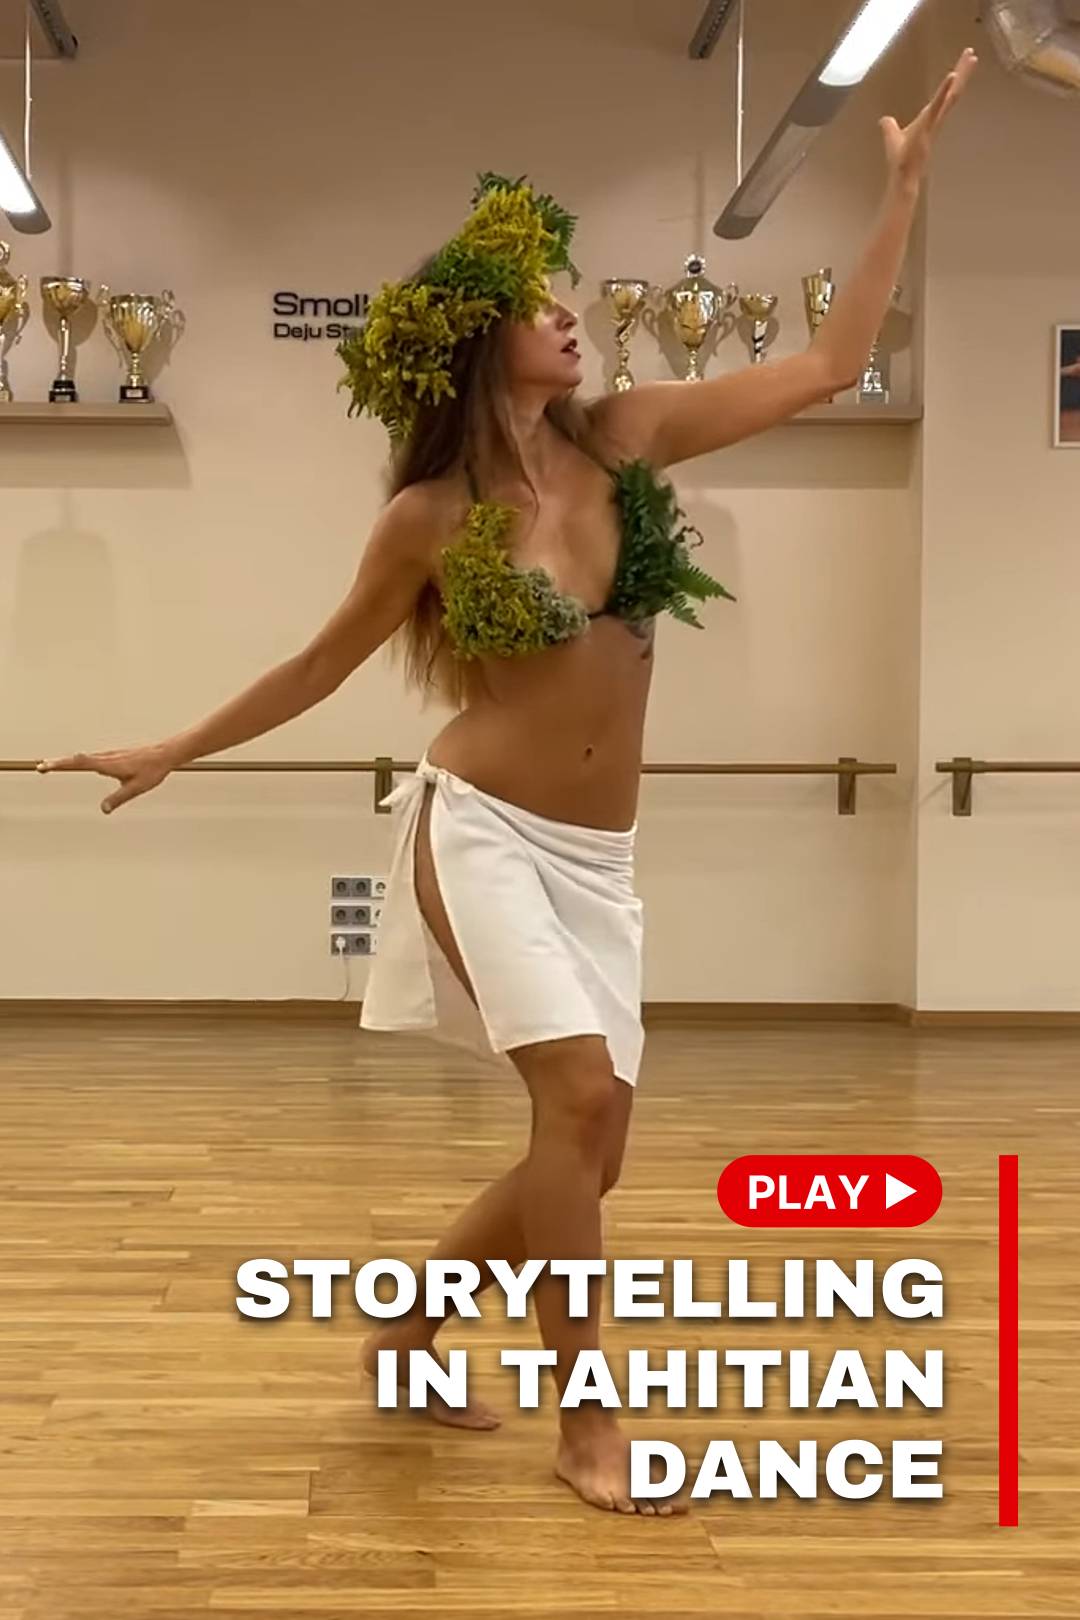 A woman in a white skirt dances tahitian dance in a dance studio